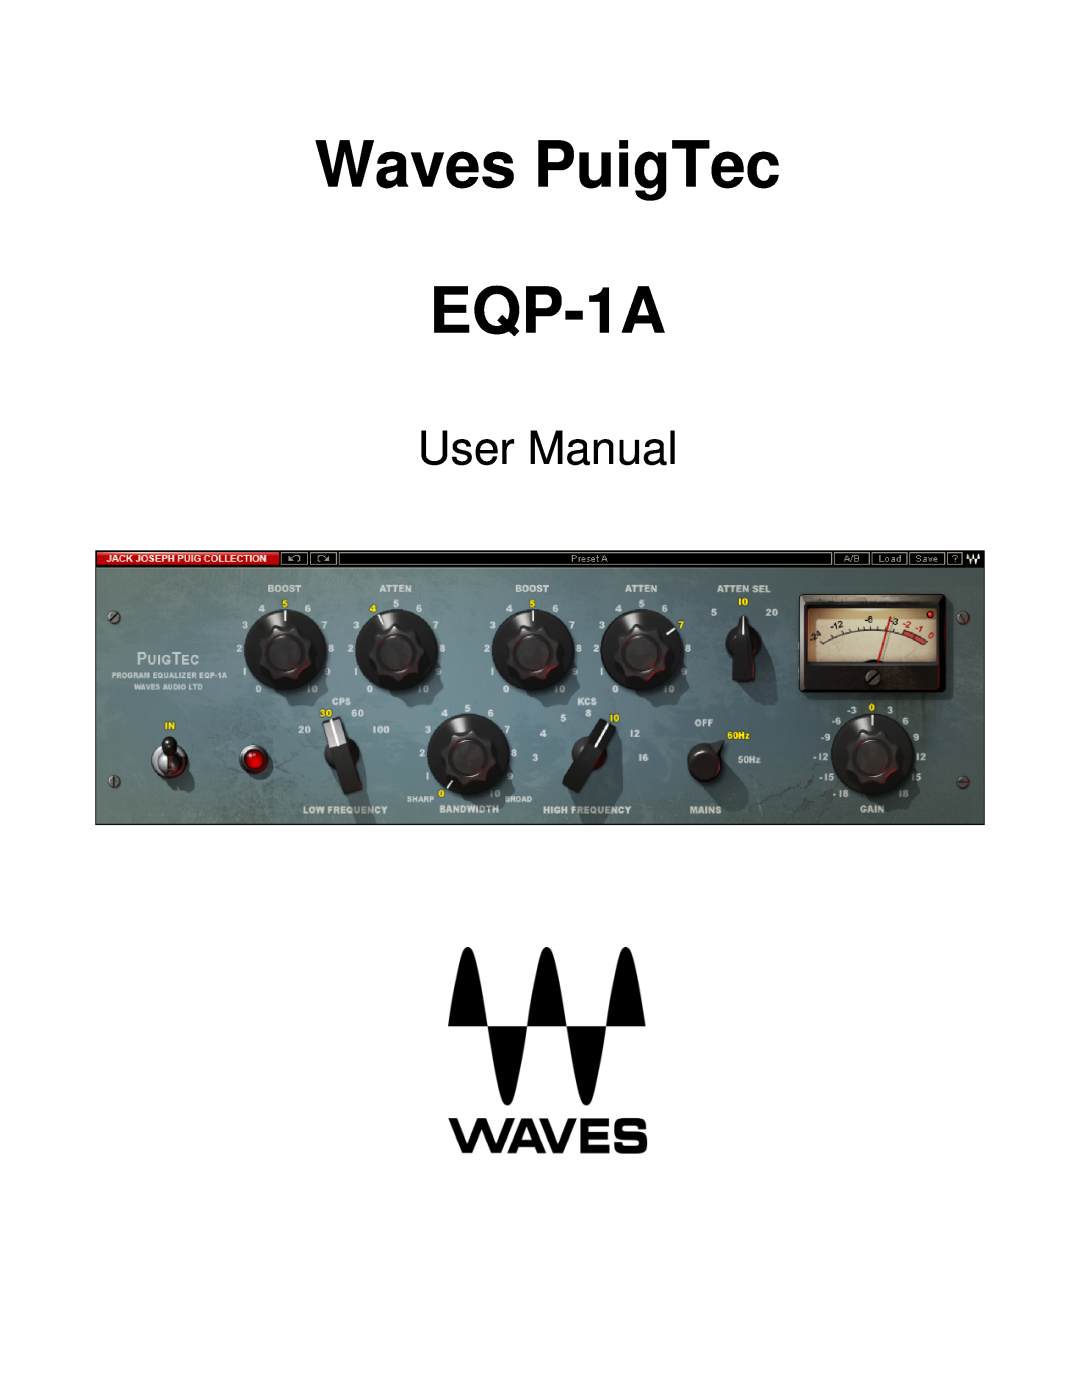 Waves EQP-1A user manual Waves PuigTec 